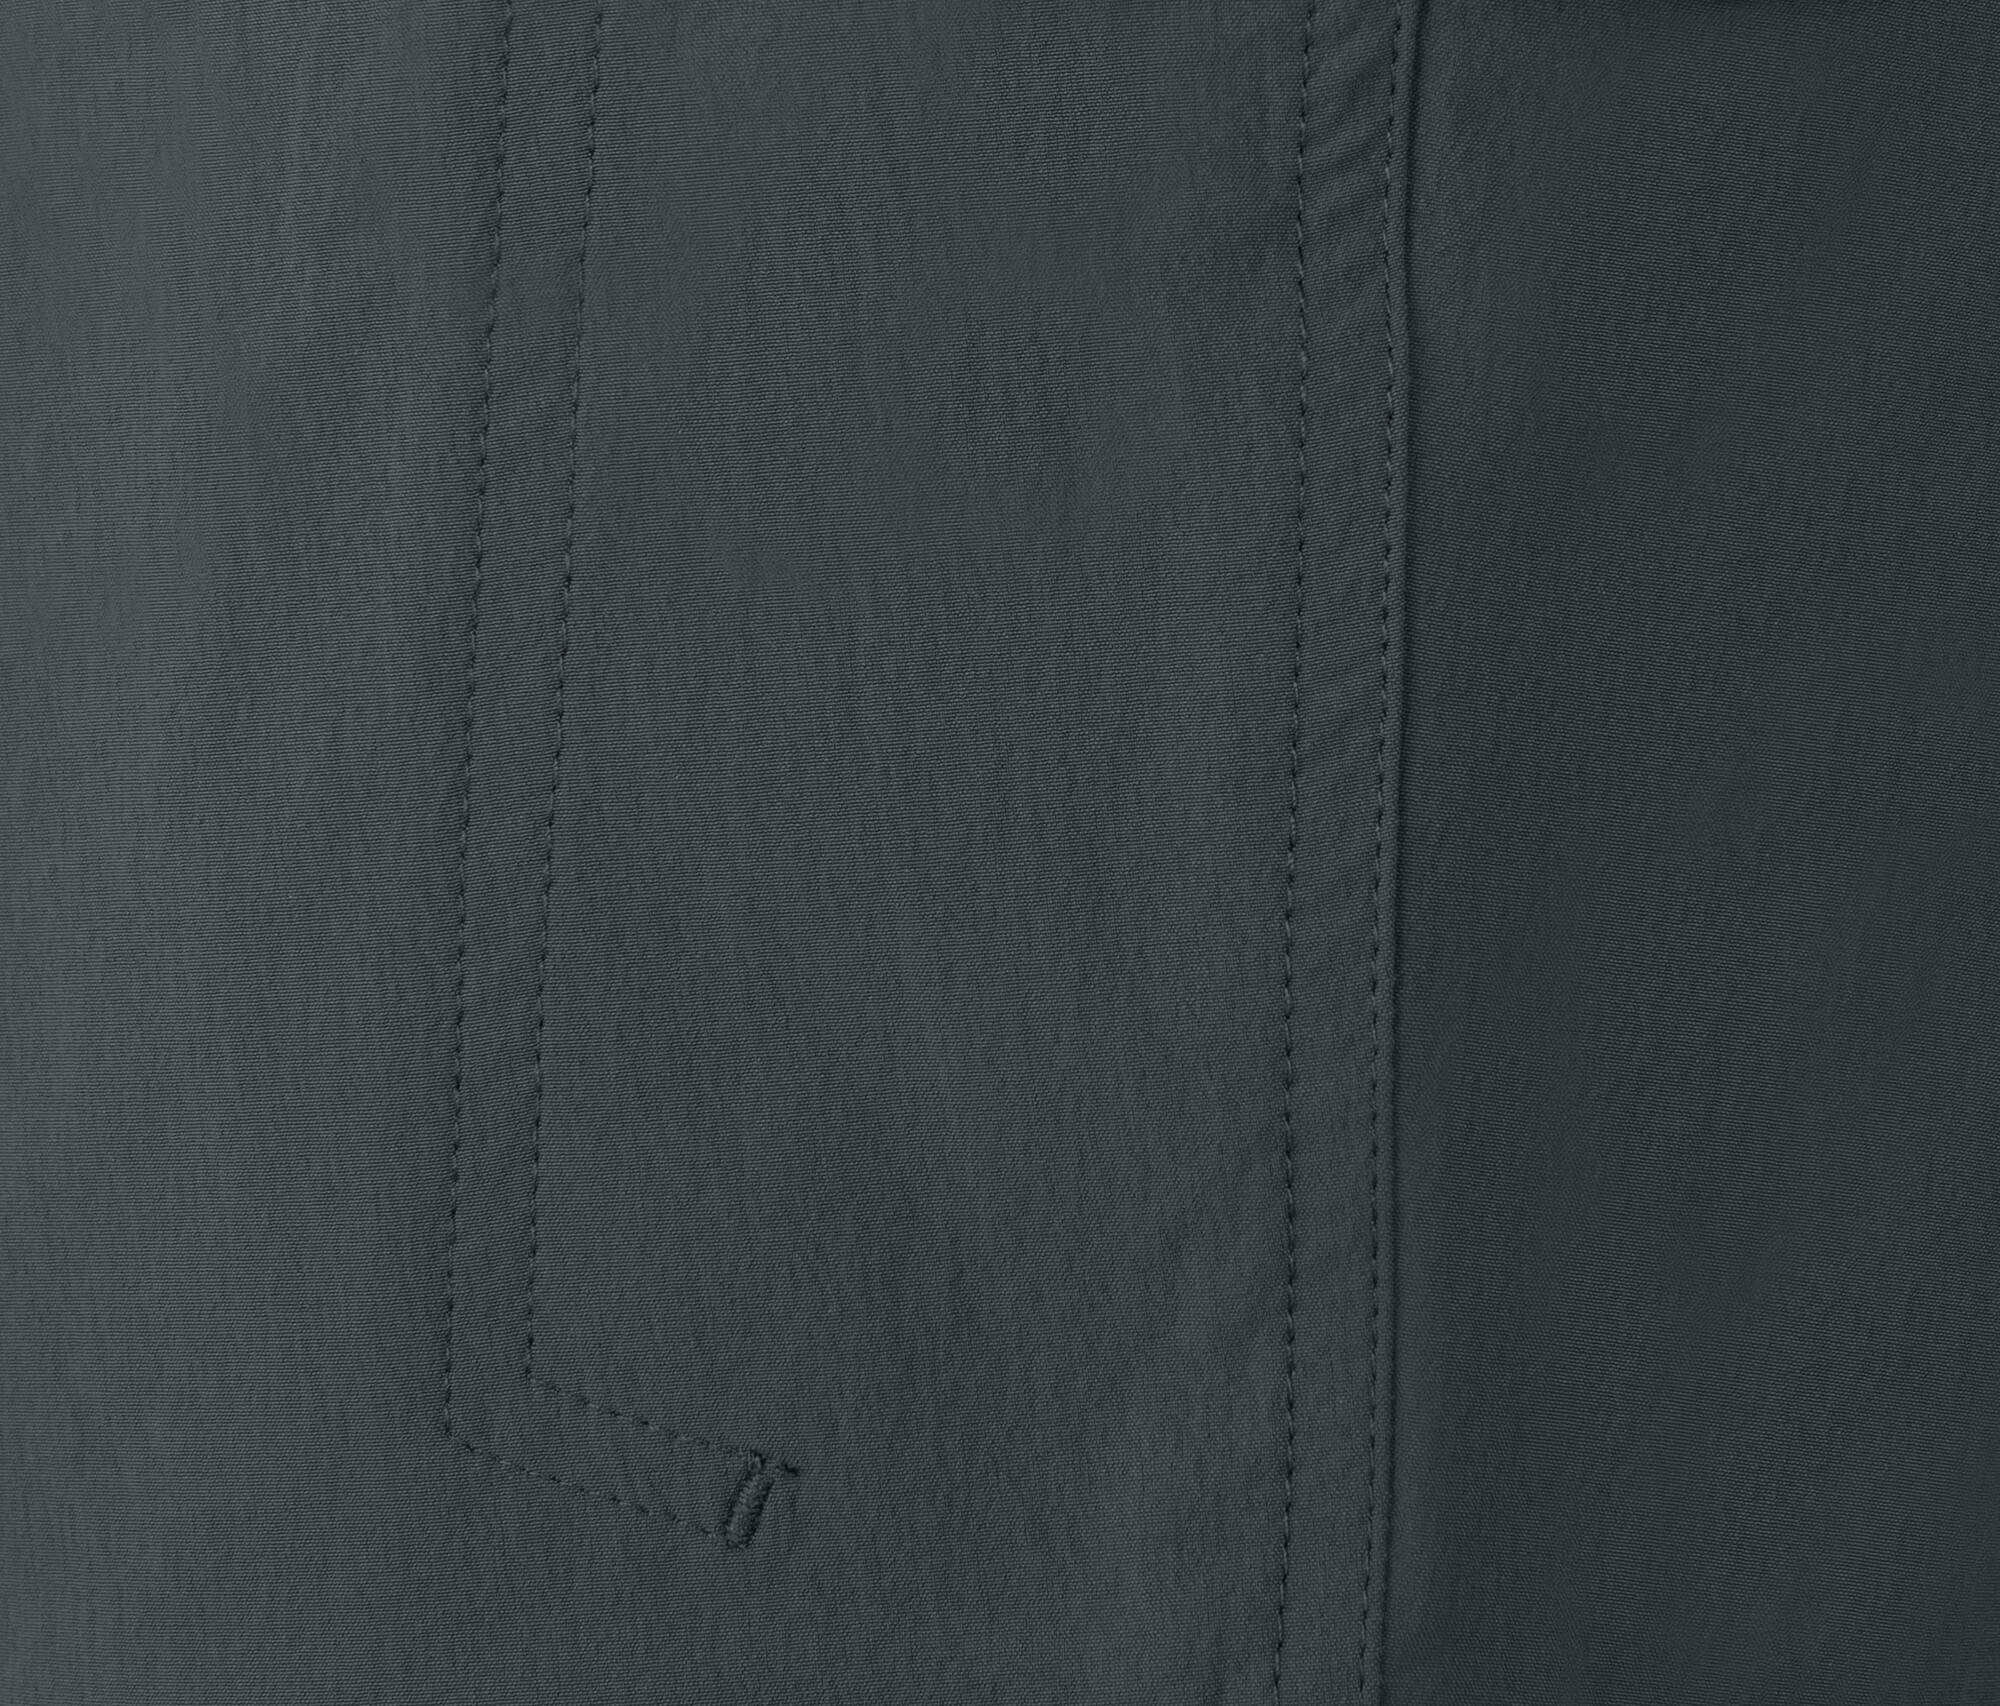 Bergson Zip-off-Hose (slim) dunkel Zipp-Off BAKER Normalgrößen, pflegeleicht, Herren grau Wanderhose, vielseitig